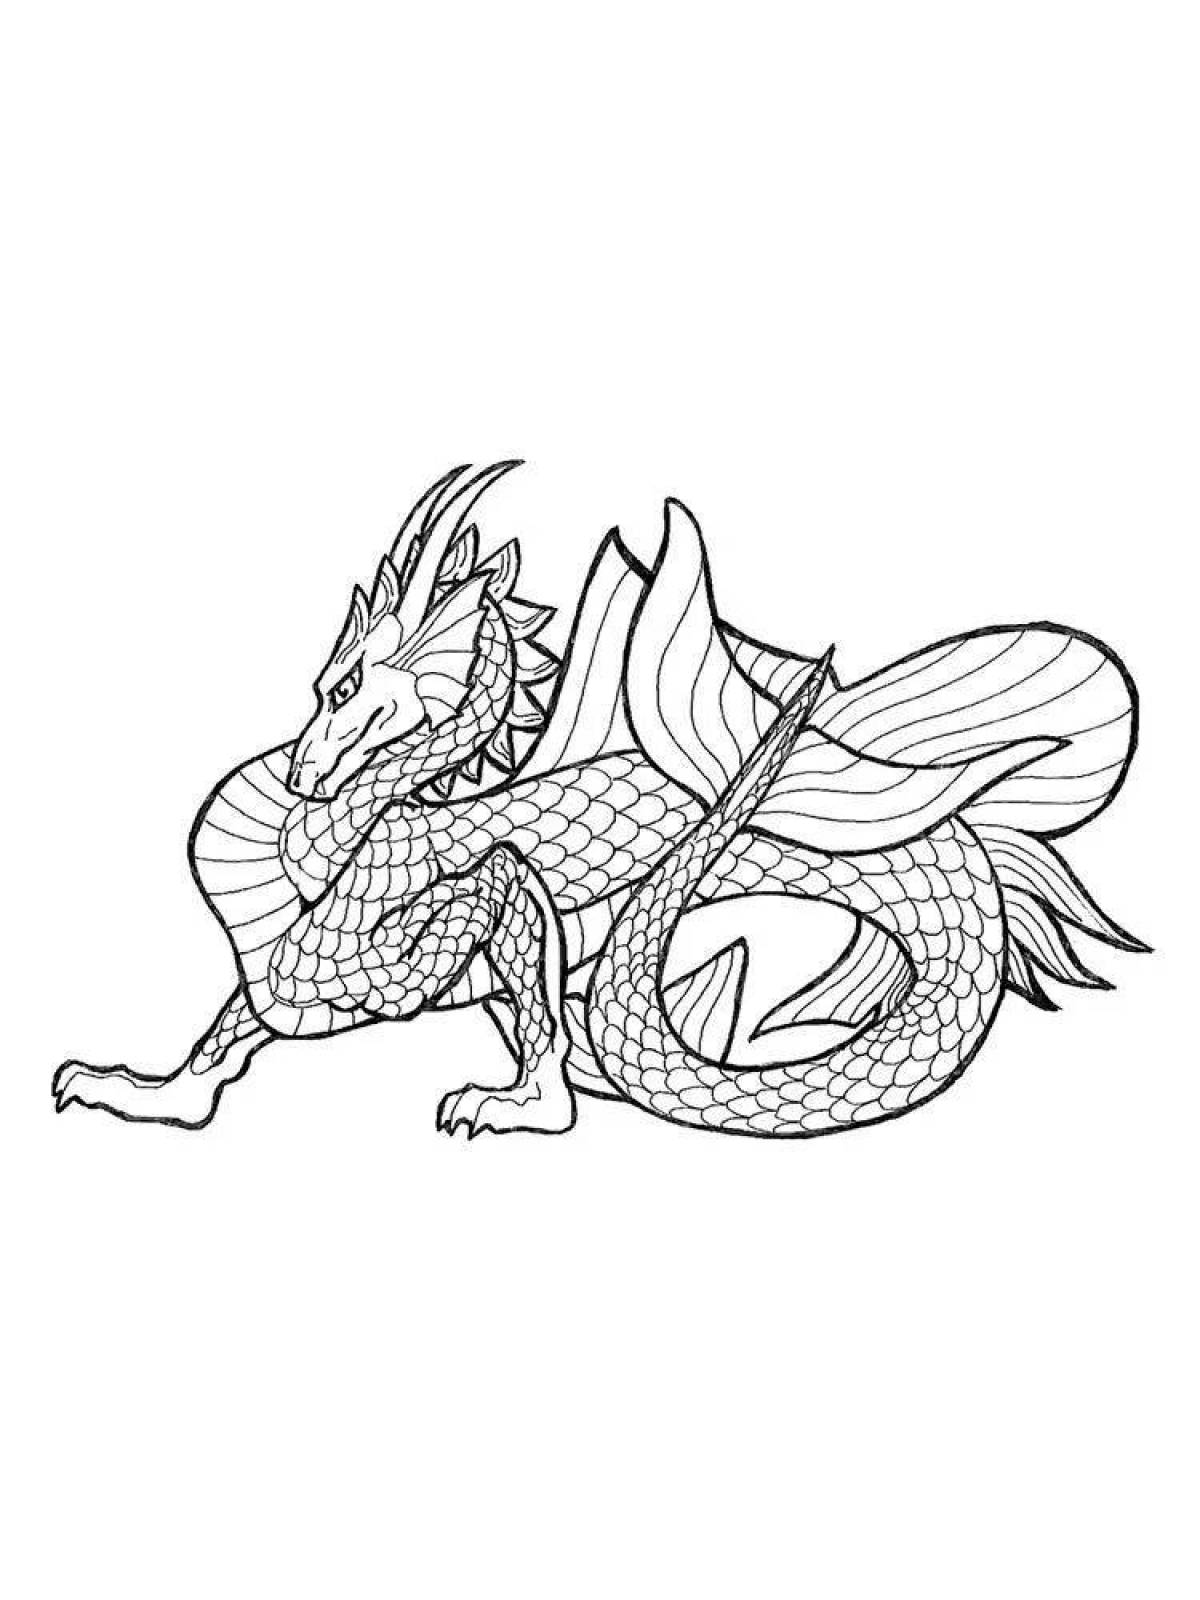 Shiny shisu dragon coloring page